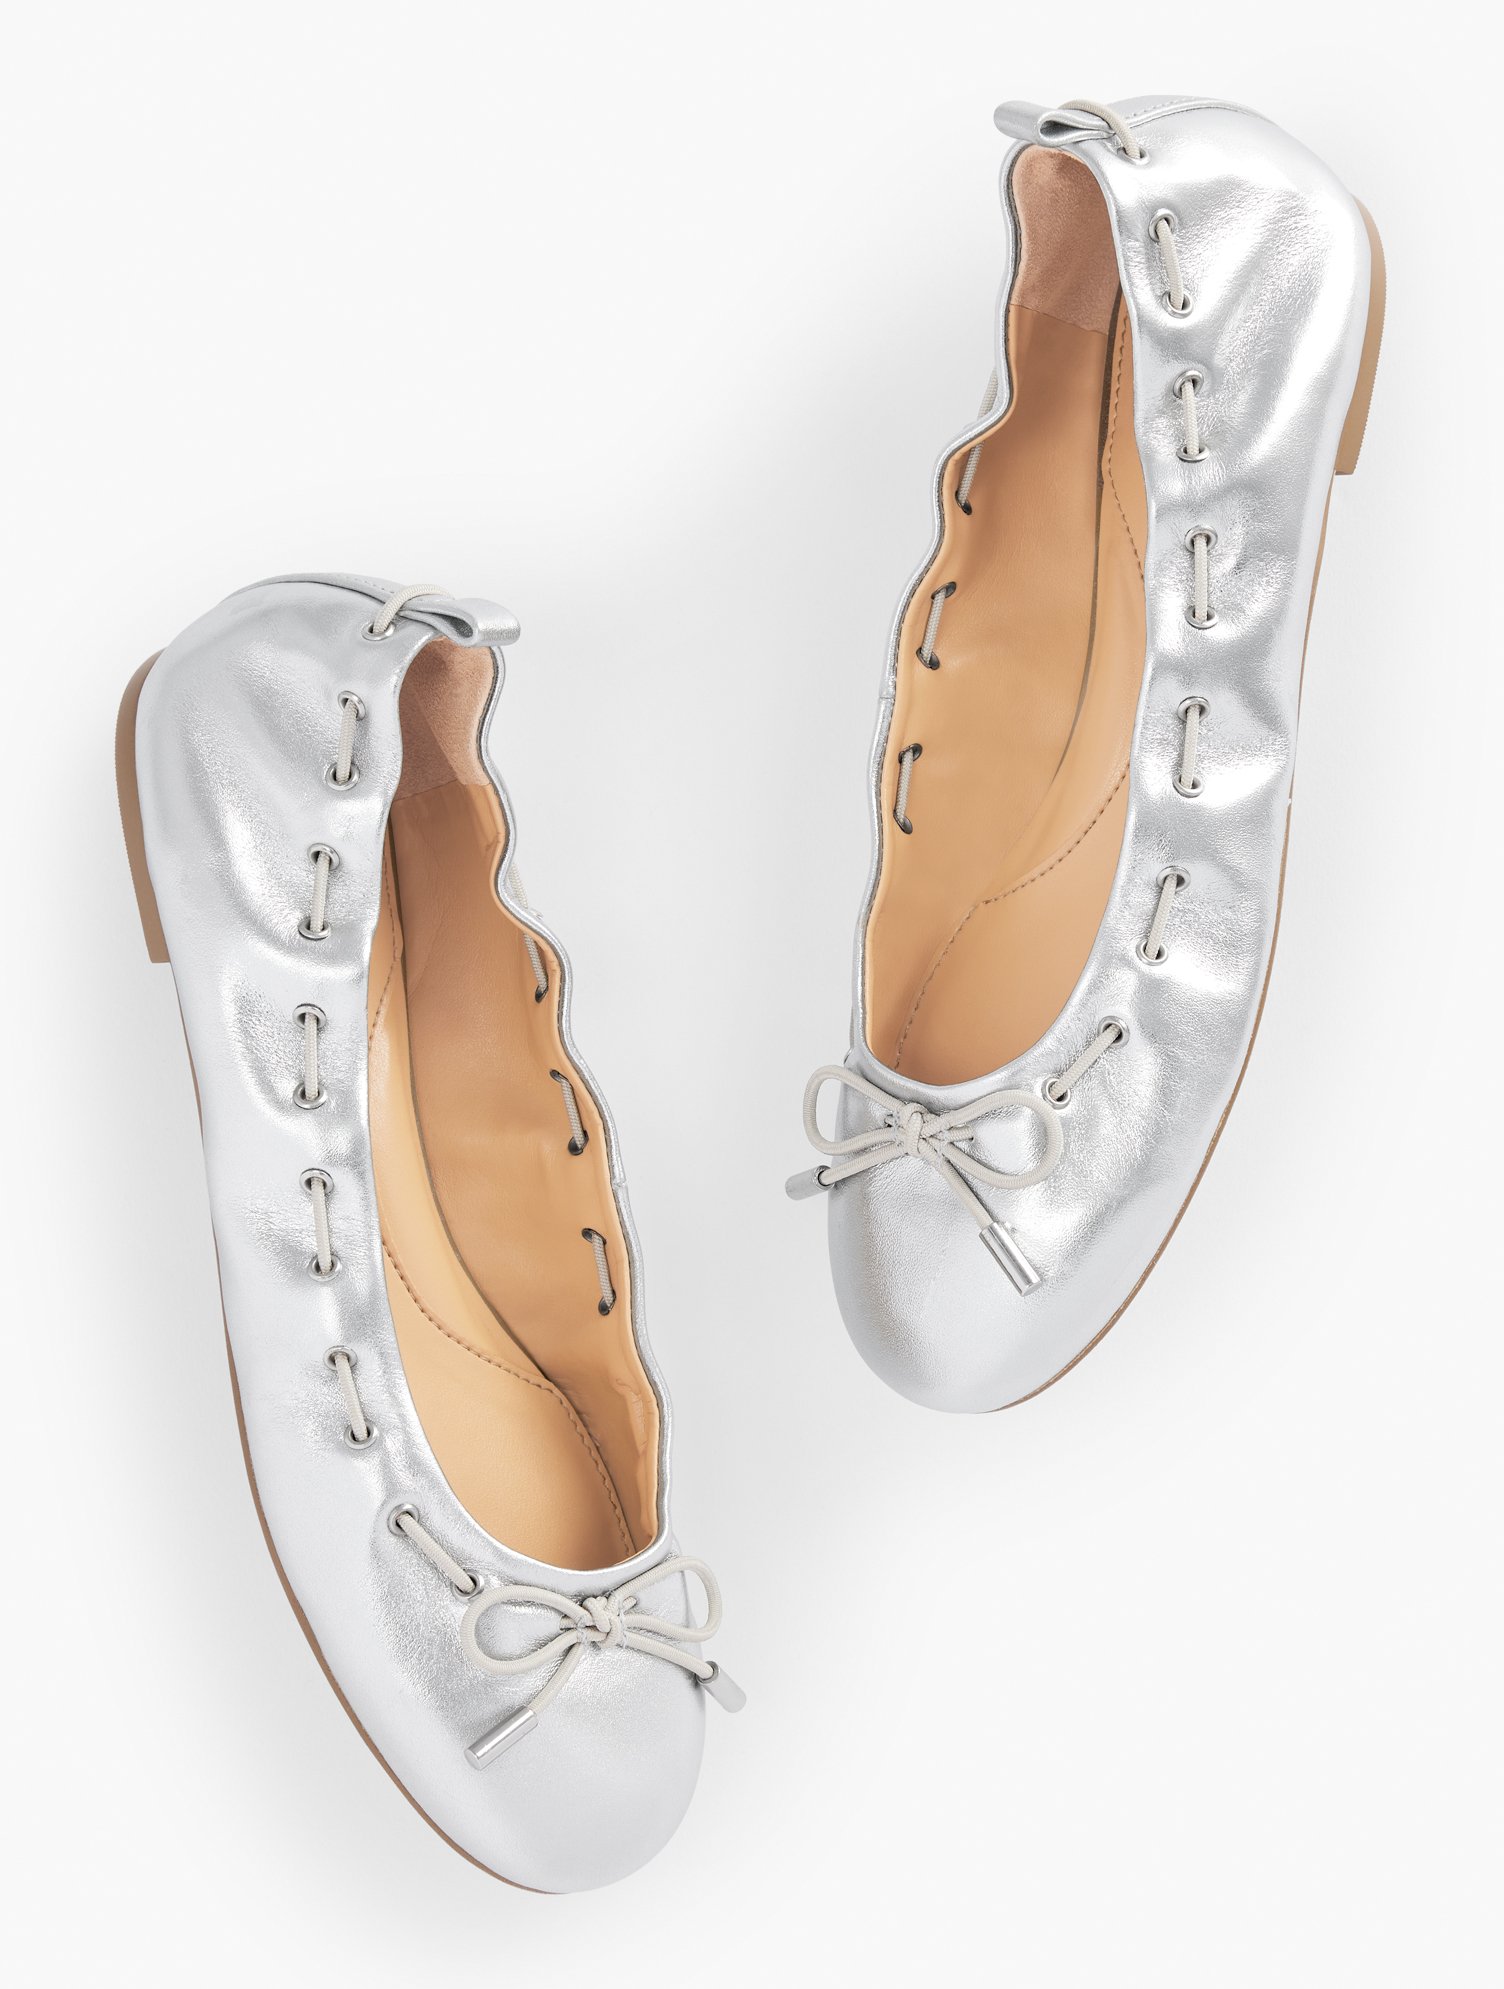 Talbots Blair Elastic Ballet Flats - Metallic Leather - Silver - 11m